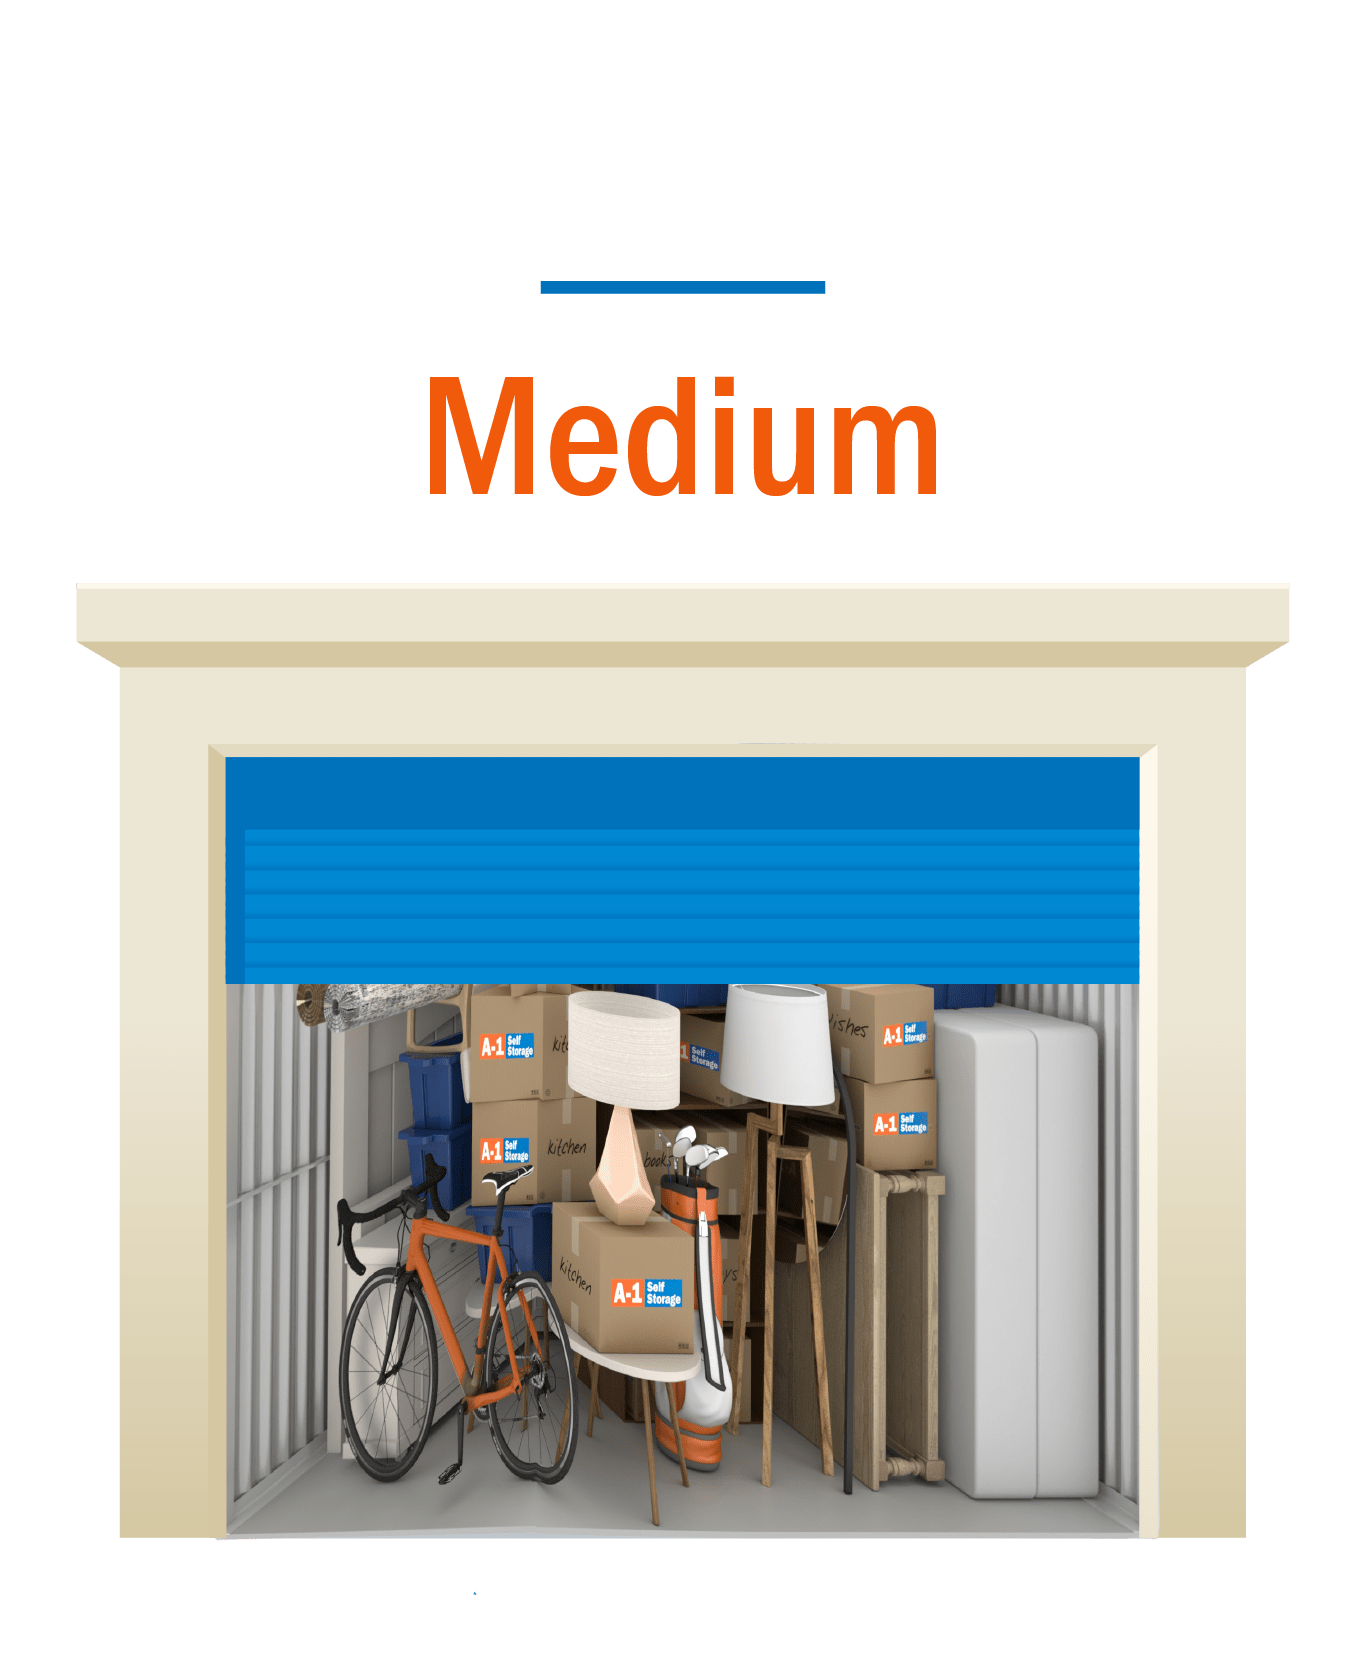 Medium storage unit graphic with open door